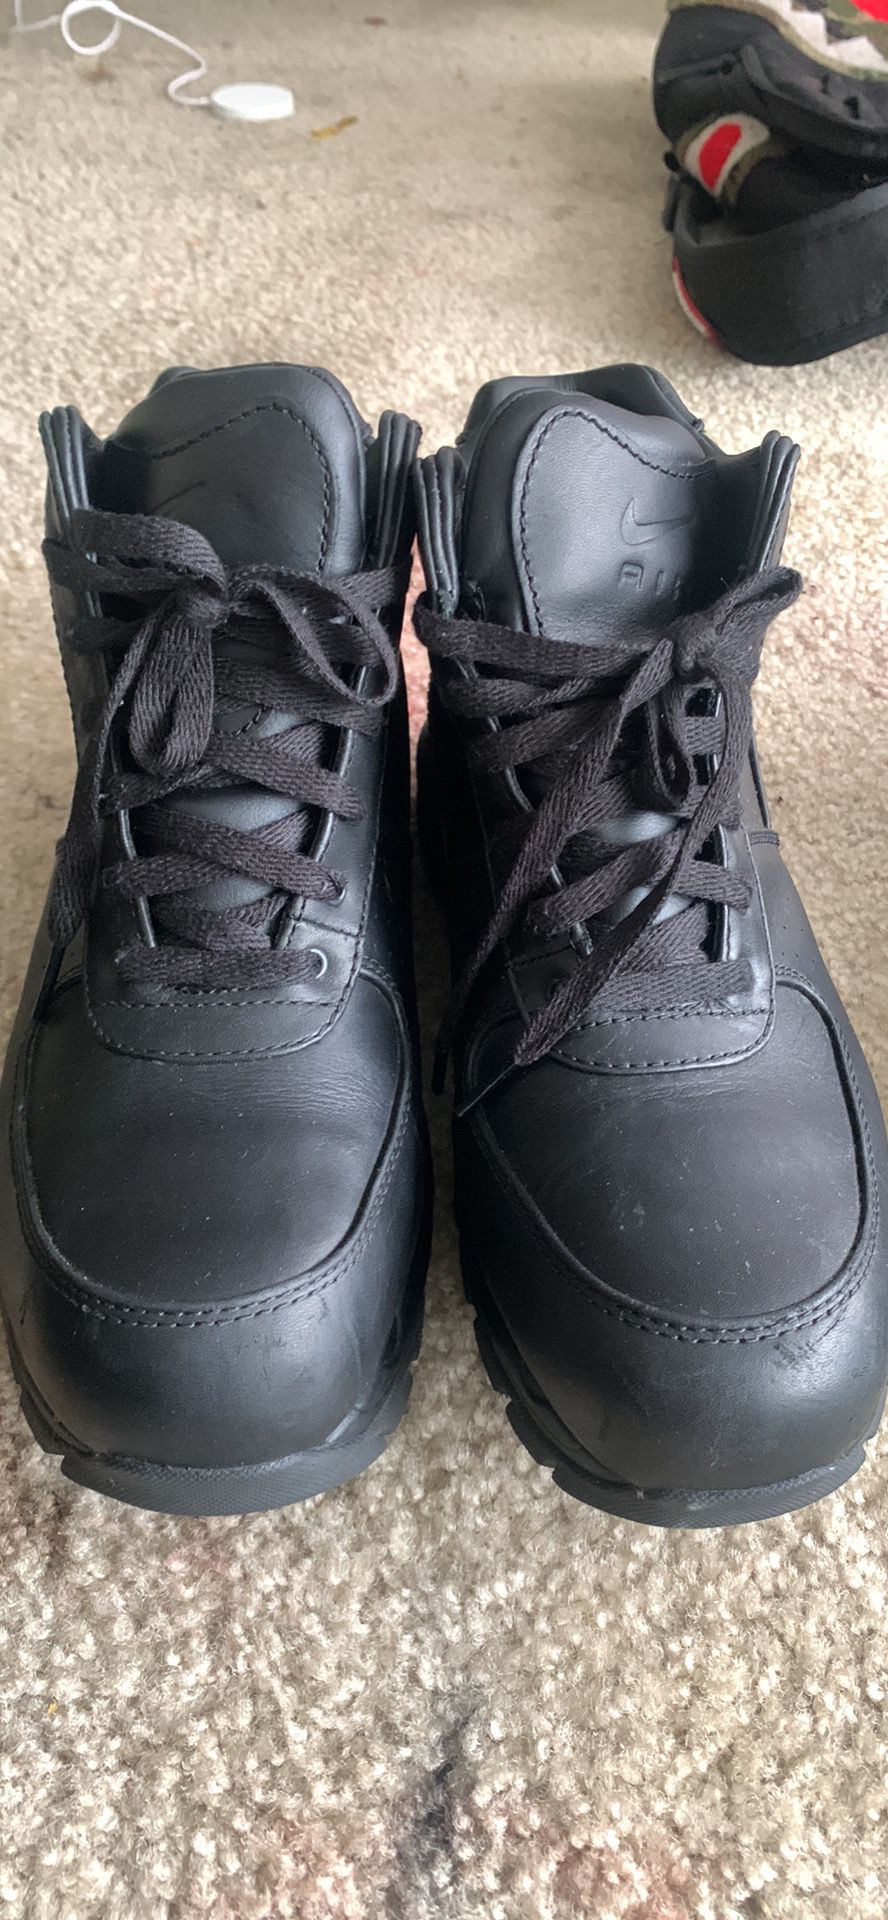 Nike Boots Size 10.5 Men